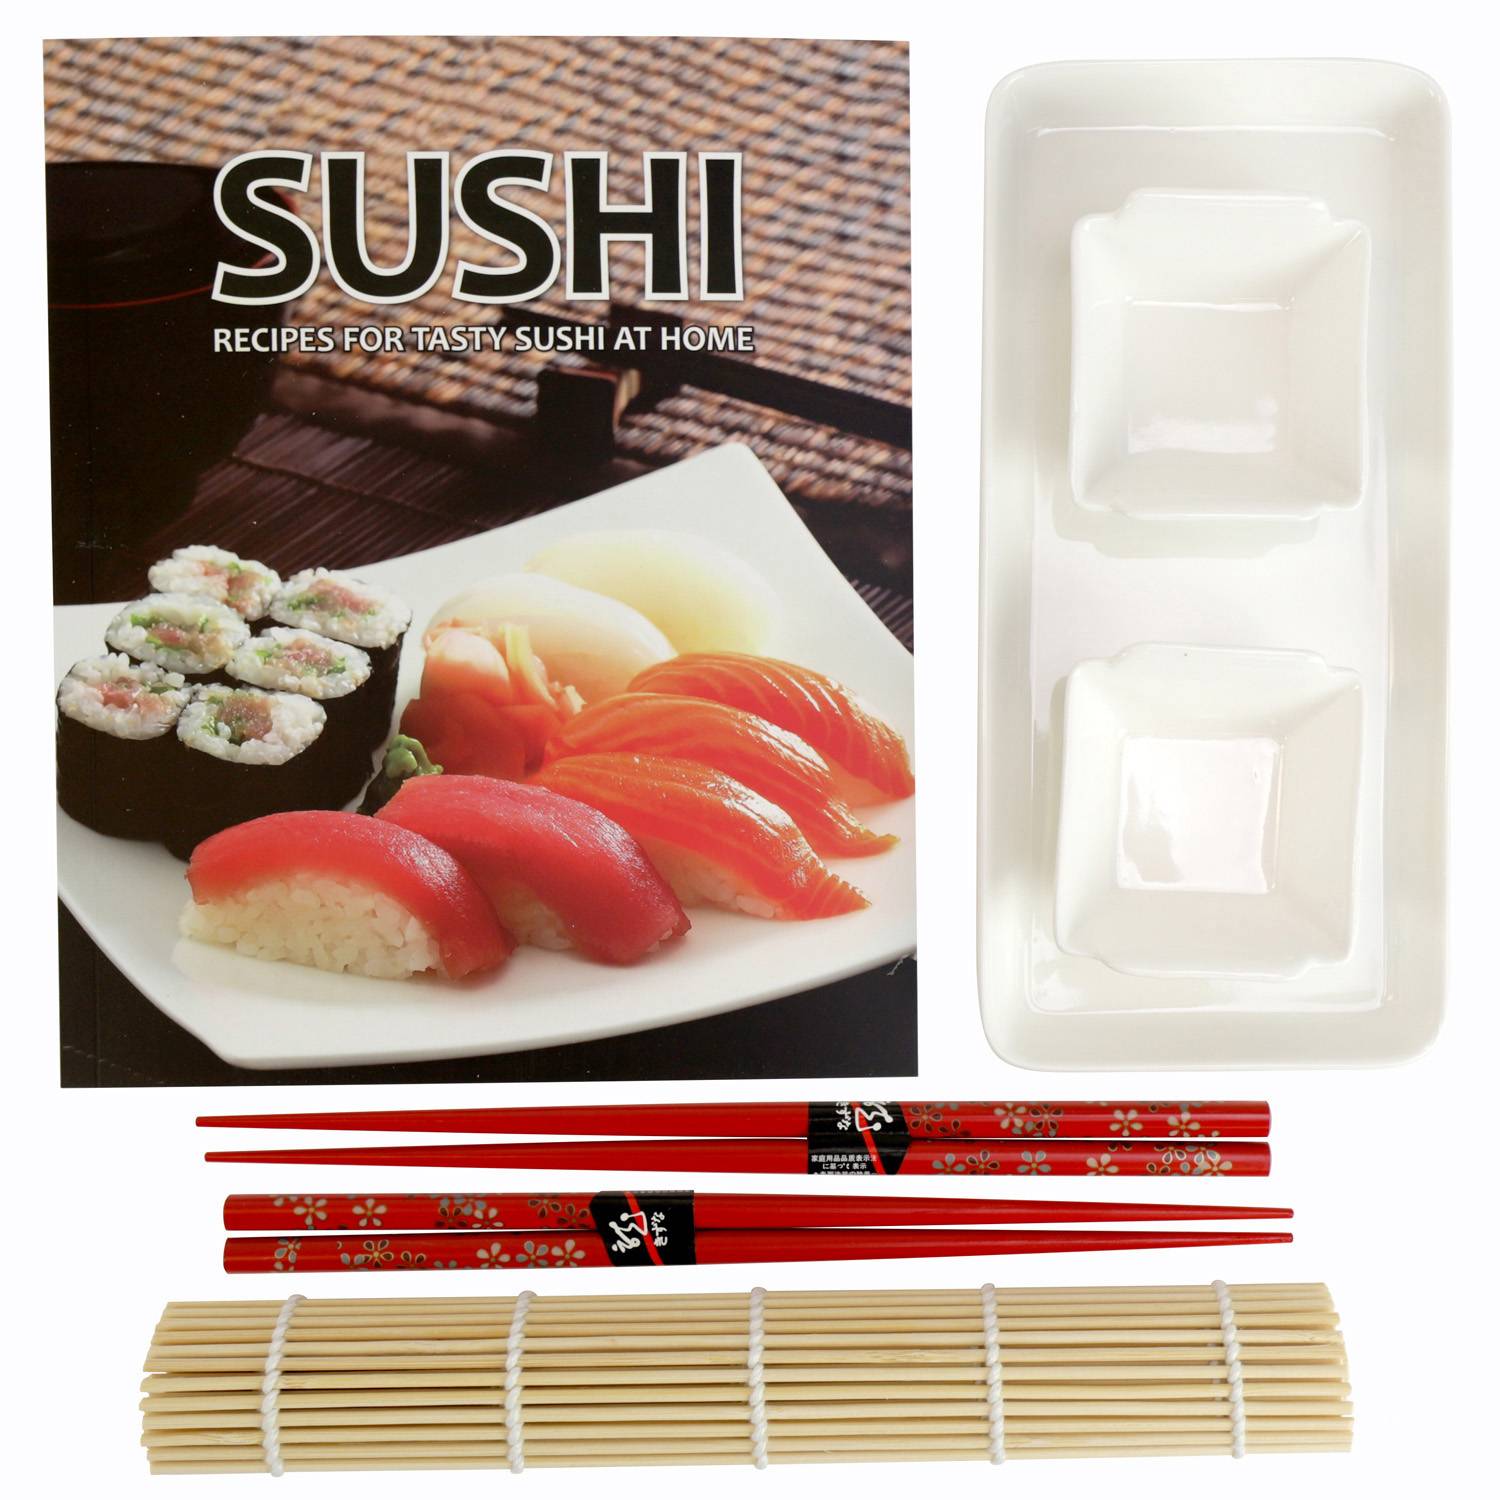 Kit Sushi - deSIAMCuisine (Thailand) Co Ltd